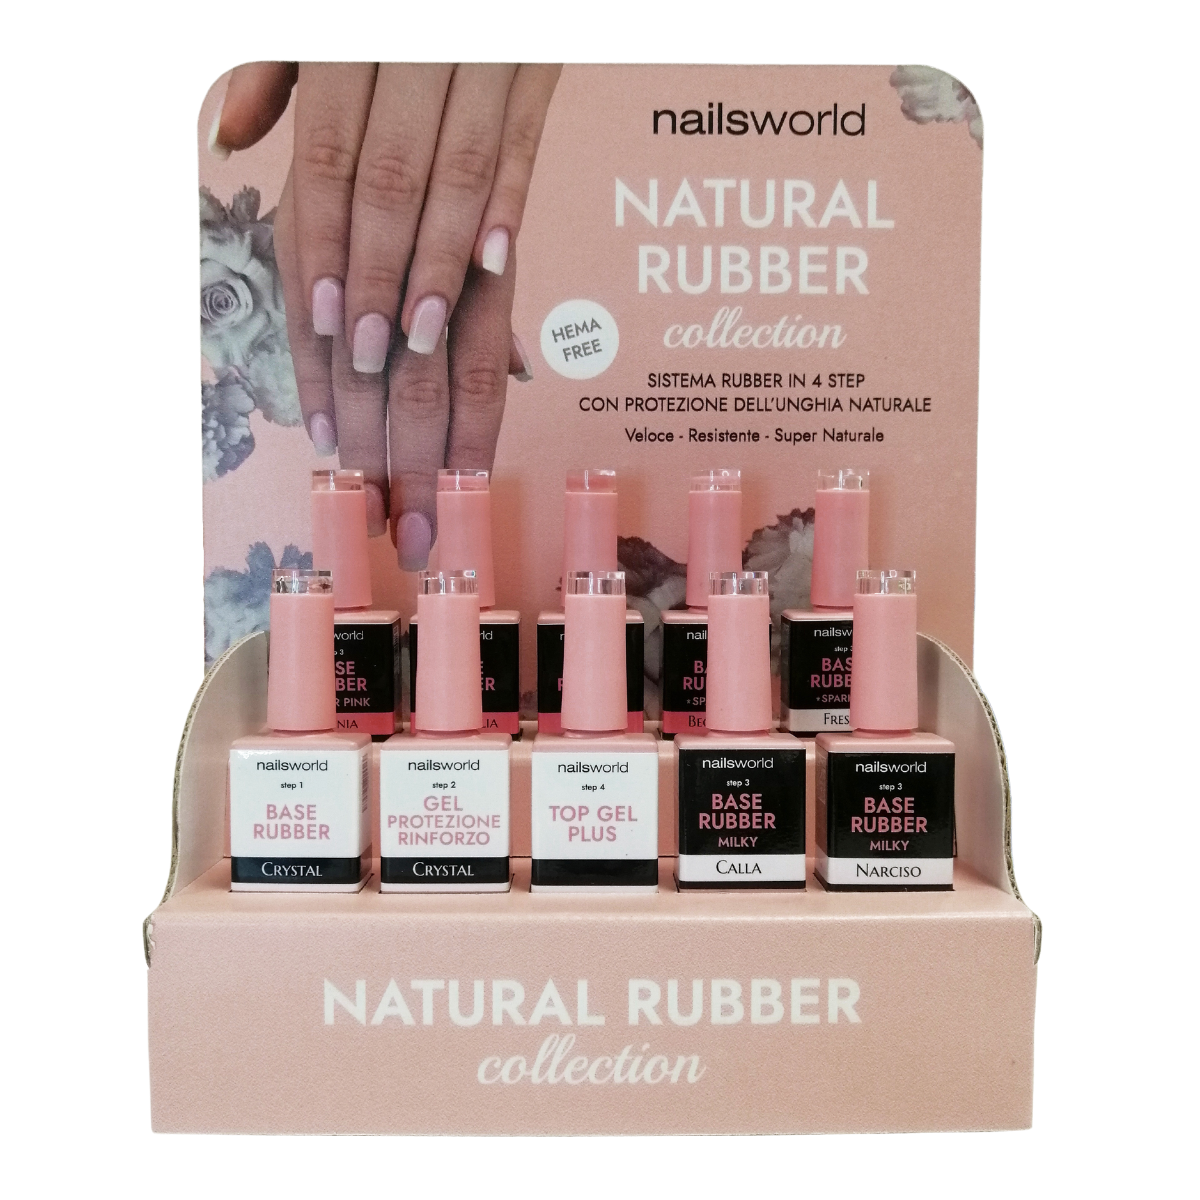 Natural Rubber Collection, kit basi rubber Nailsworld da 10 pezzi